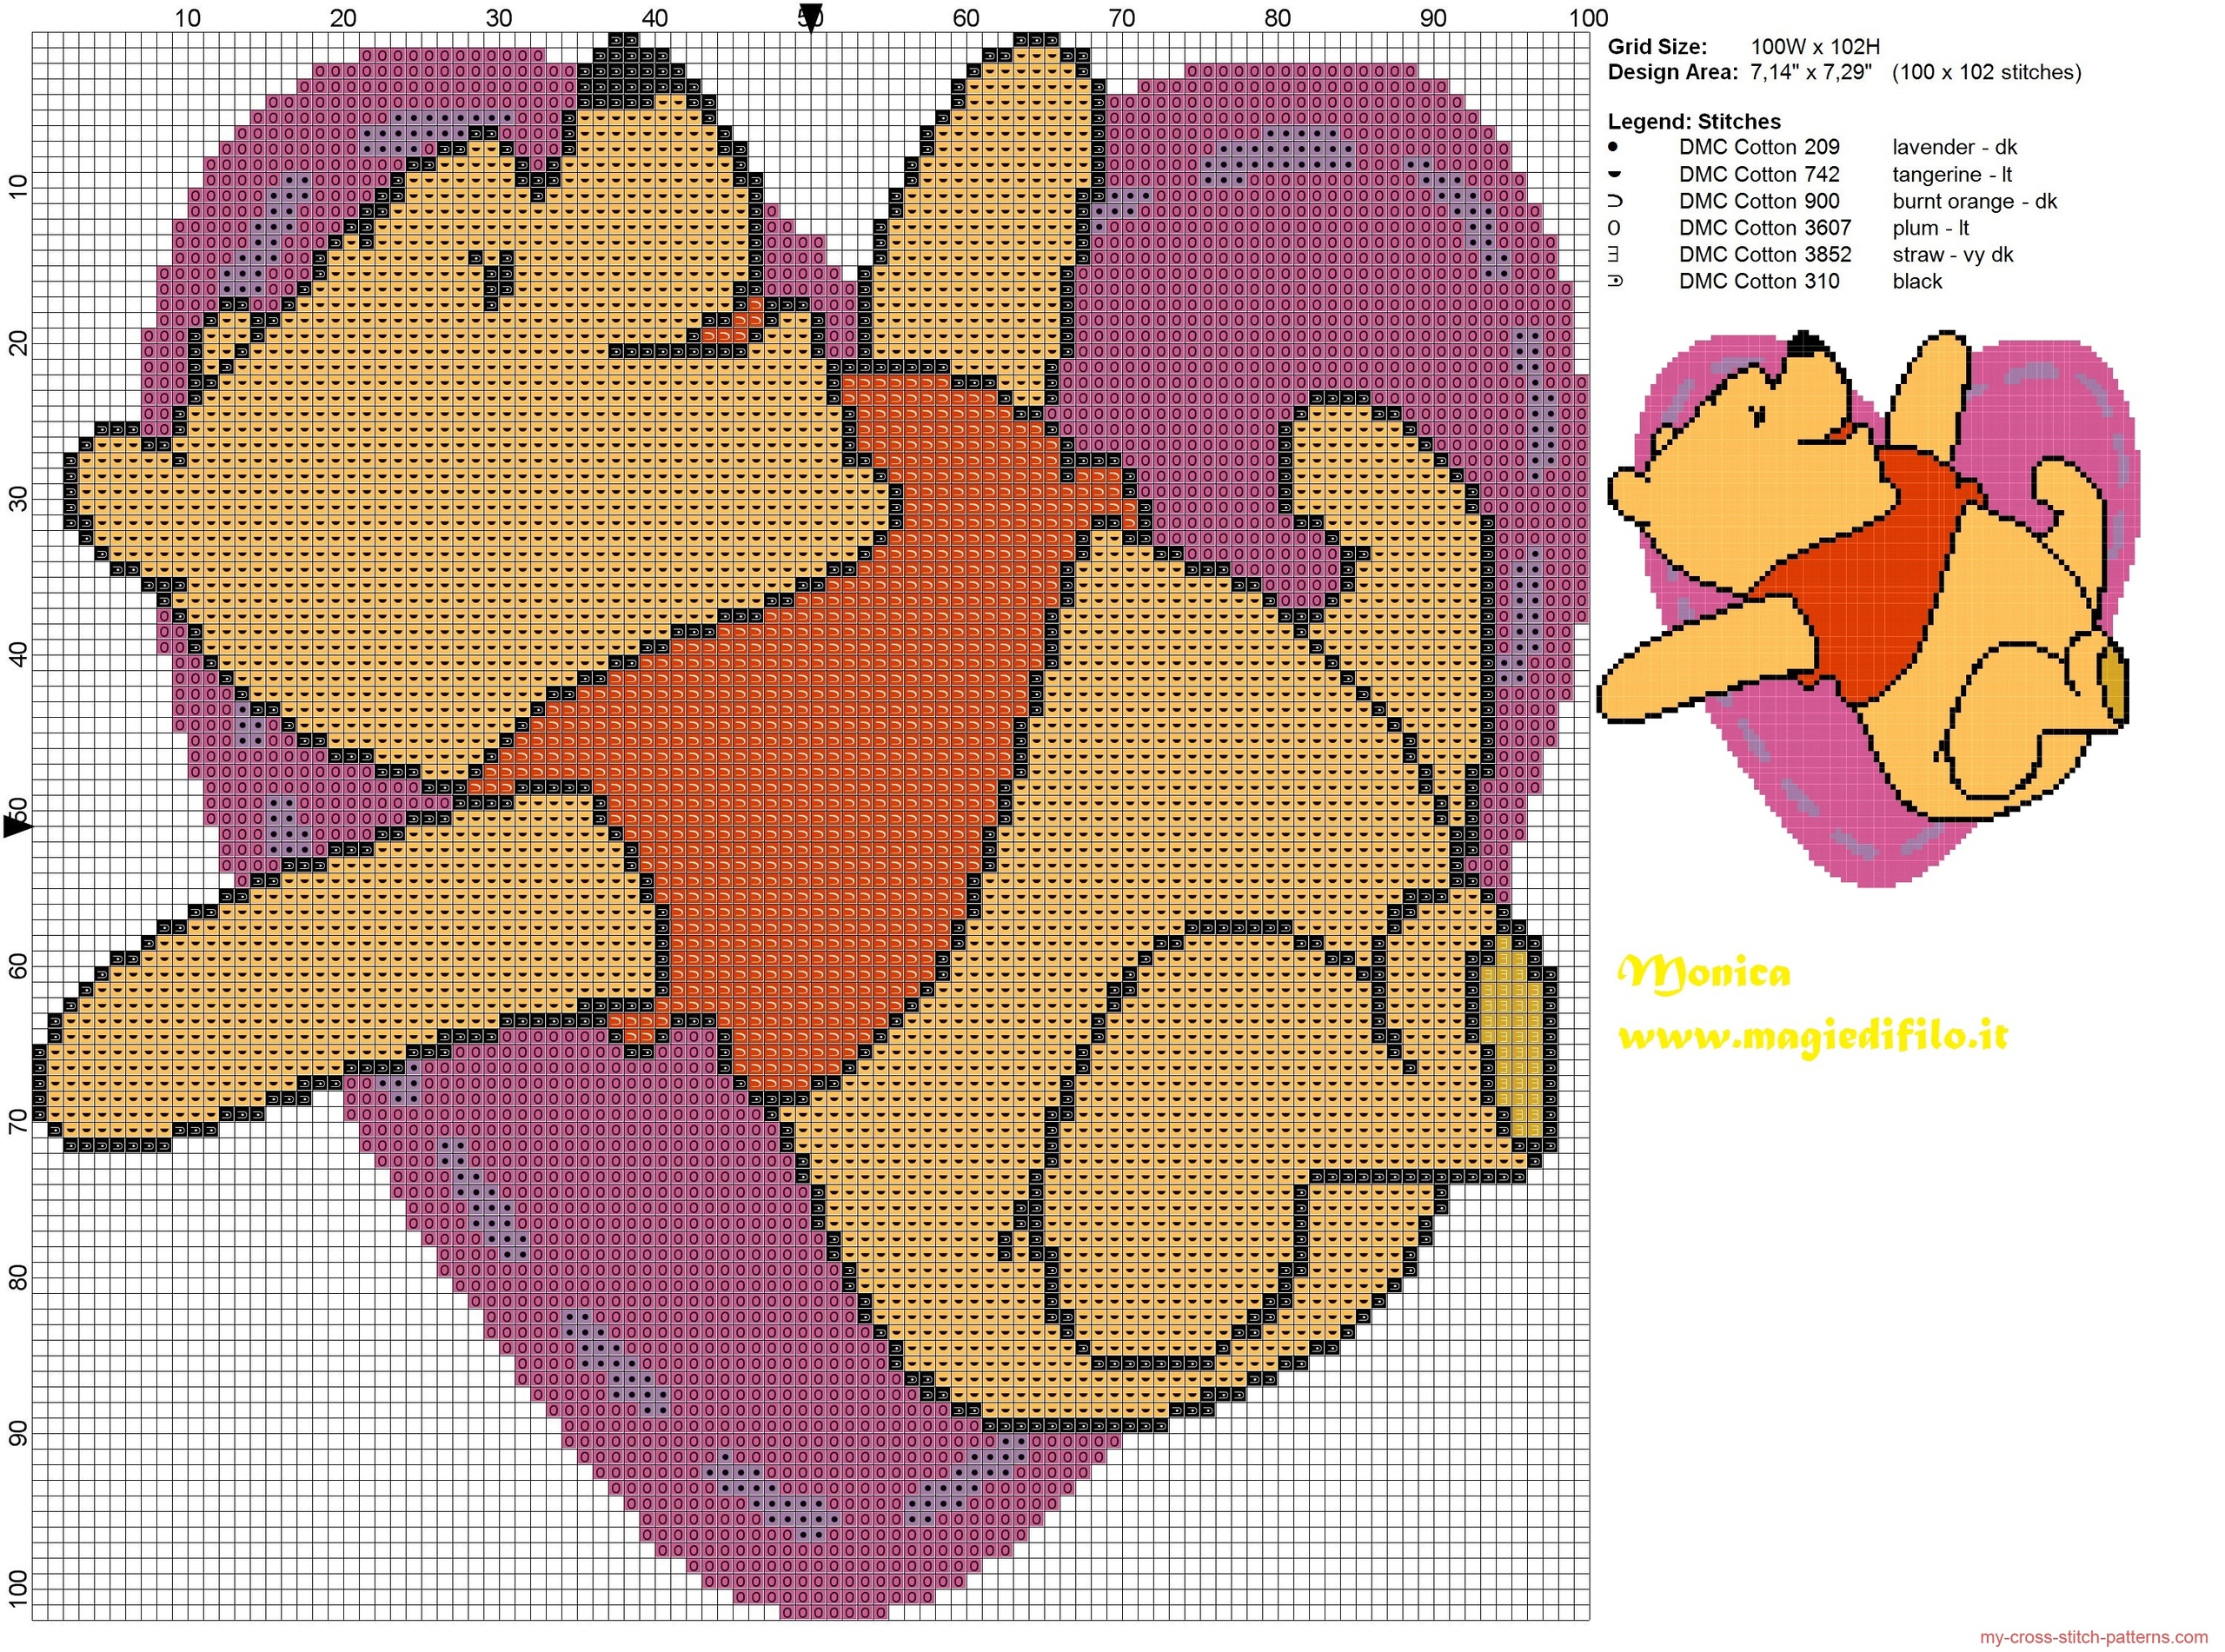 winnie_the_pooh_in_the_heart_cross_stitch_pattern_